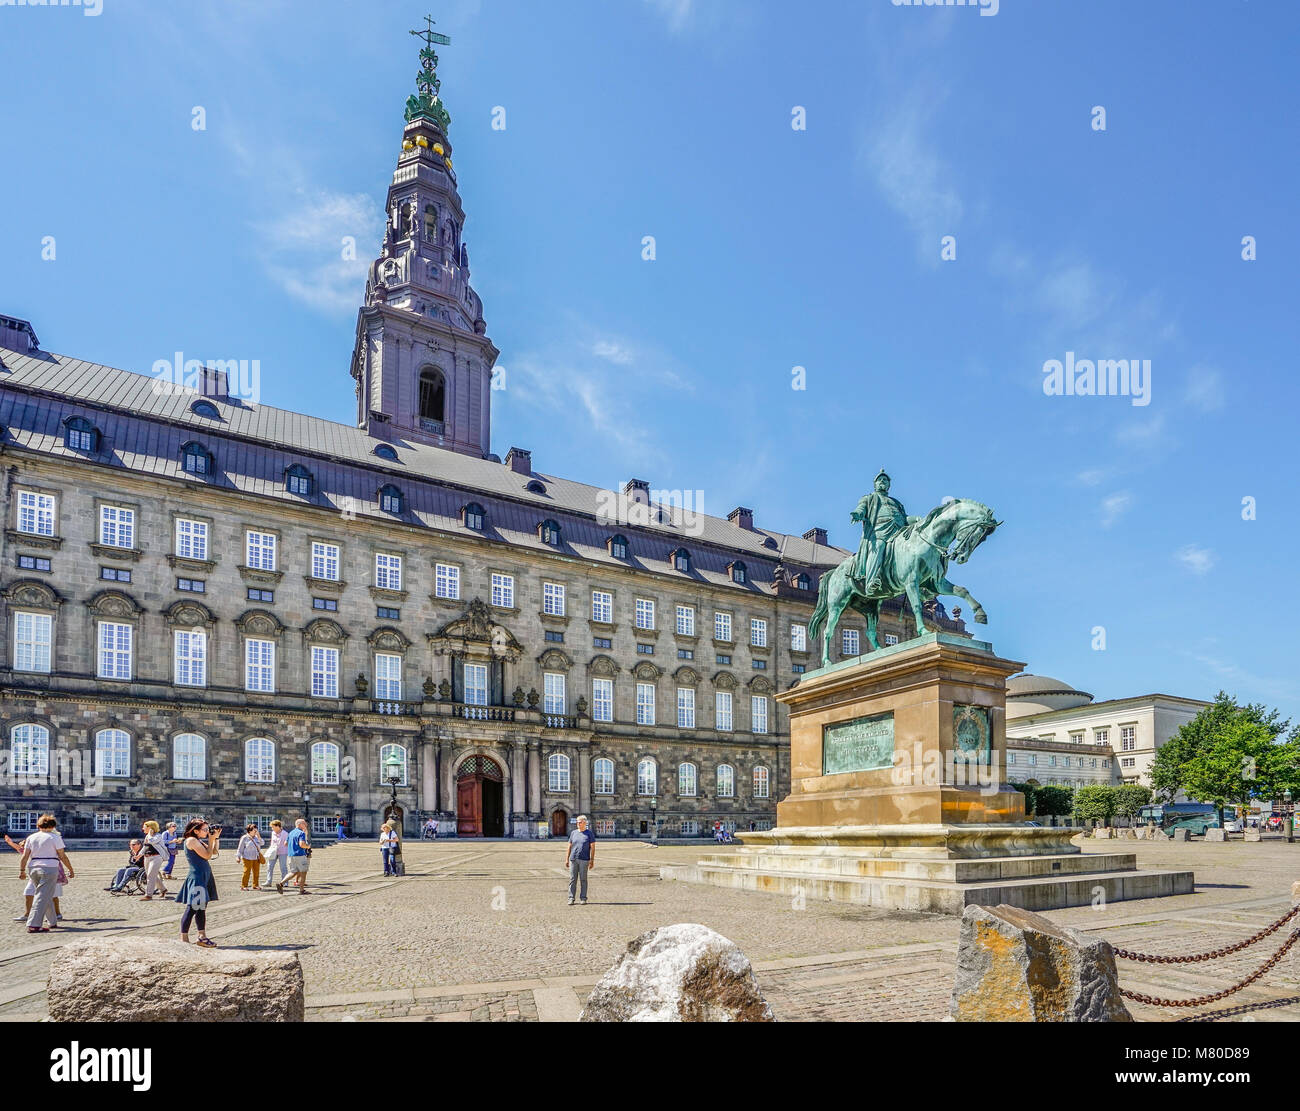 Denmark, Zealand, Copenhagen, equestrian statue of Frederick VII at Christianborg Palace, seat of the Folketinget, the Danish Parliament Stock Photo